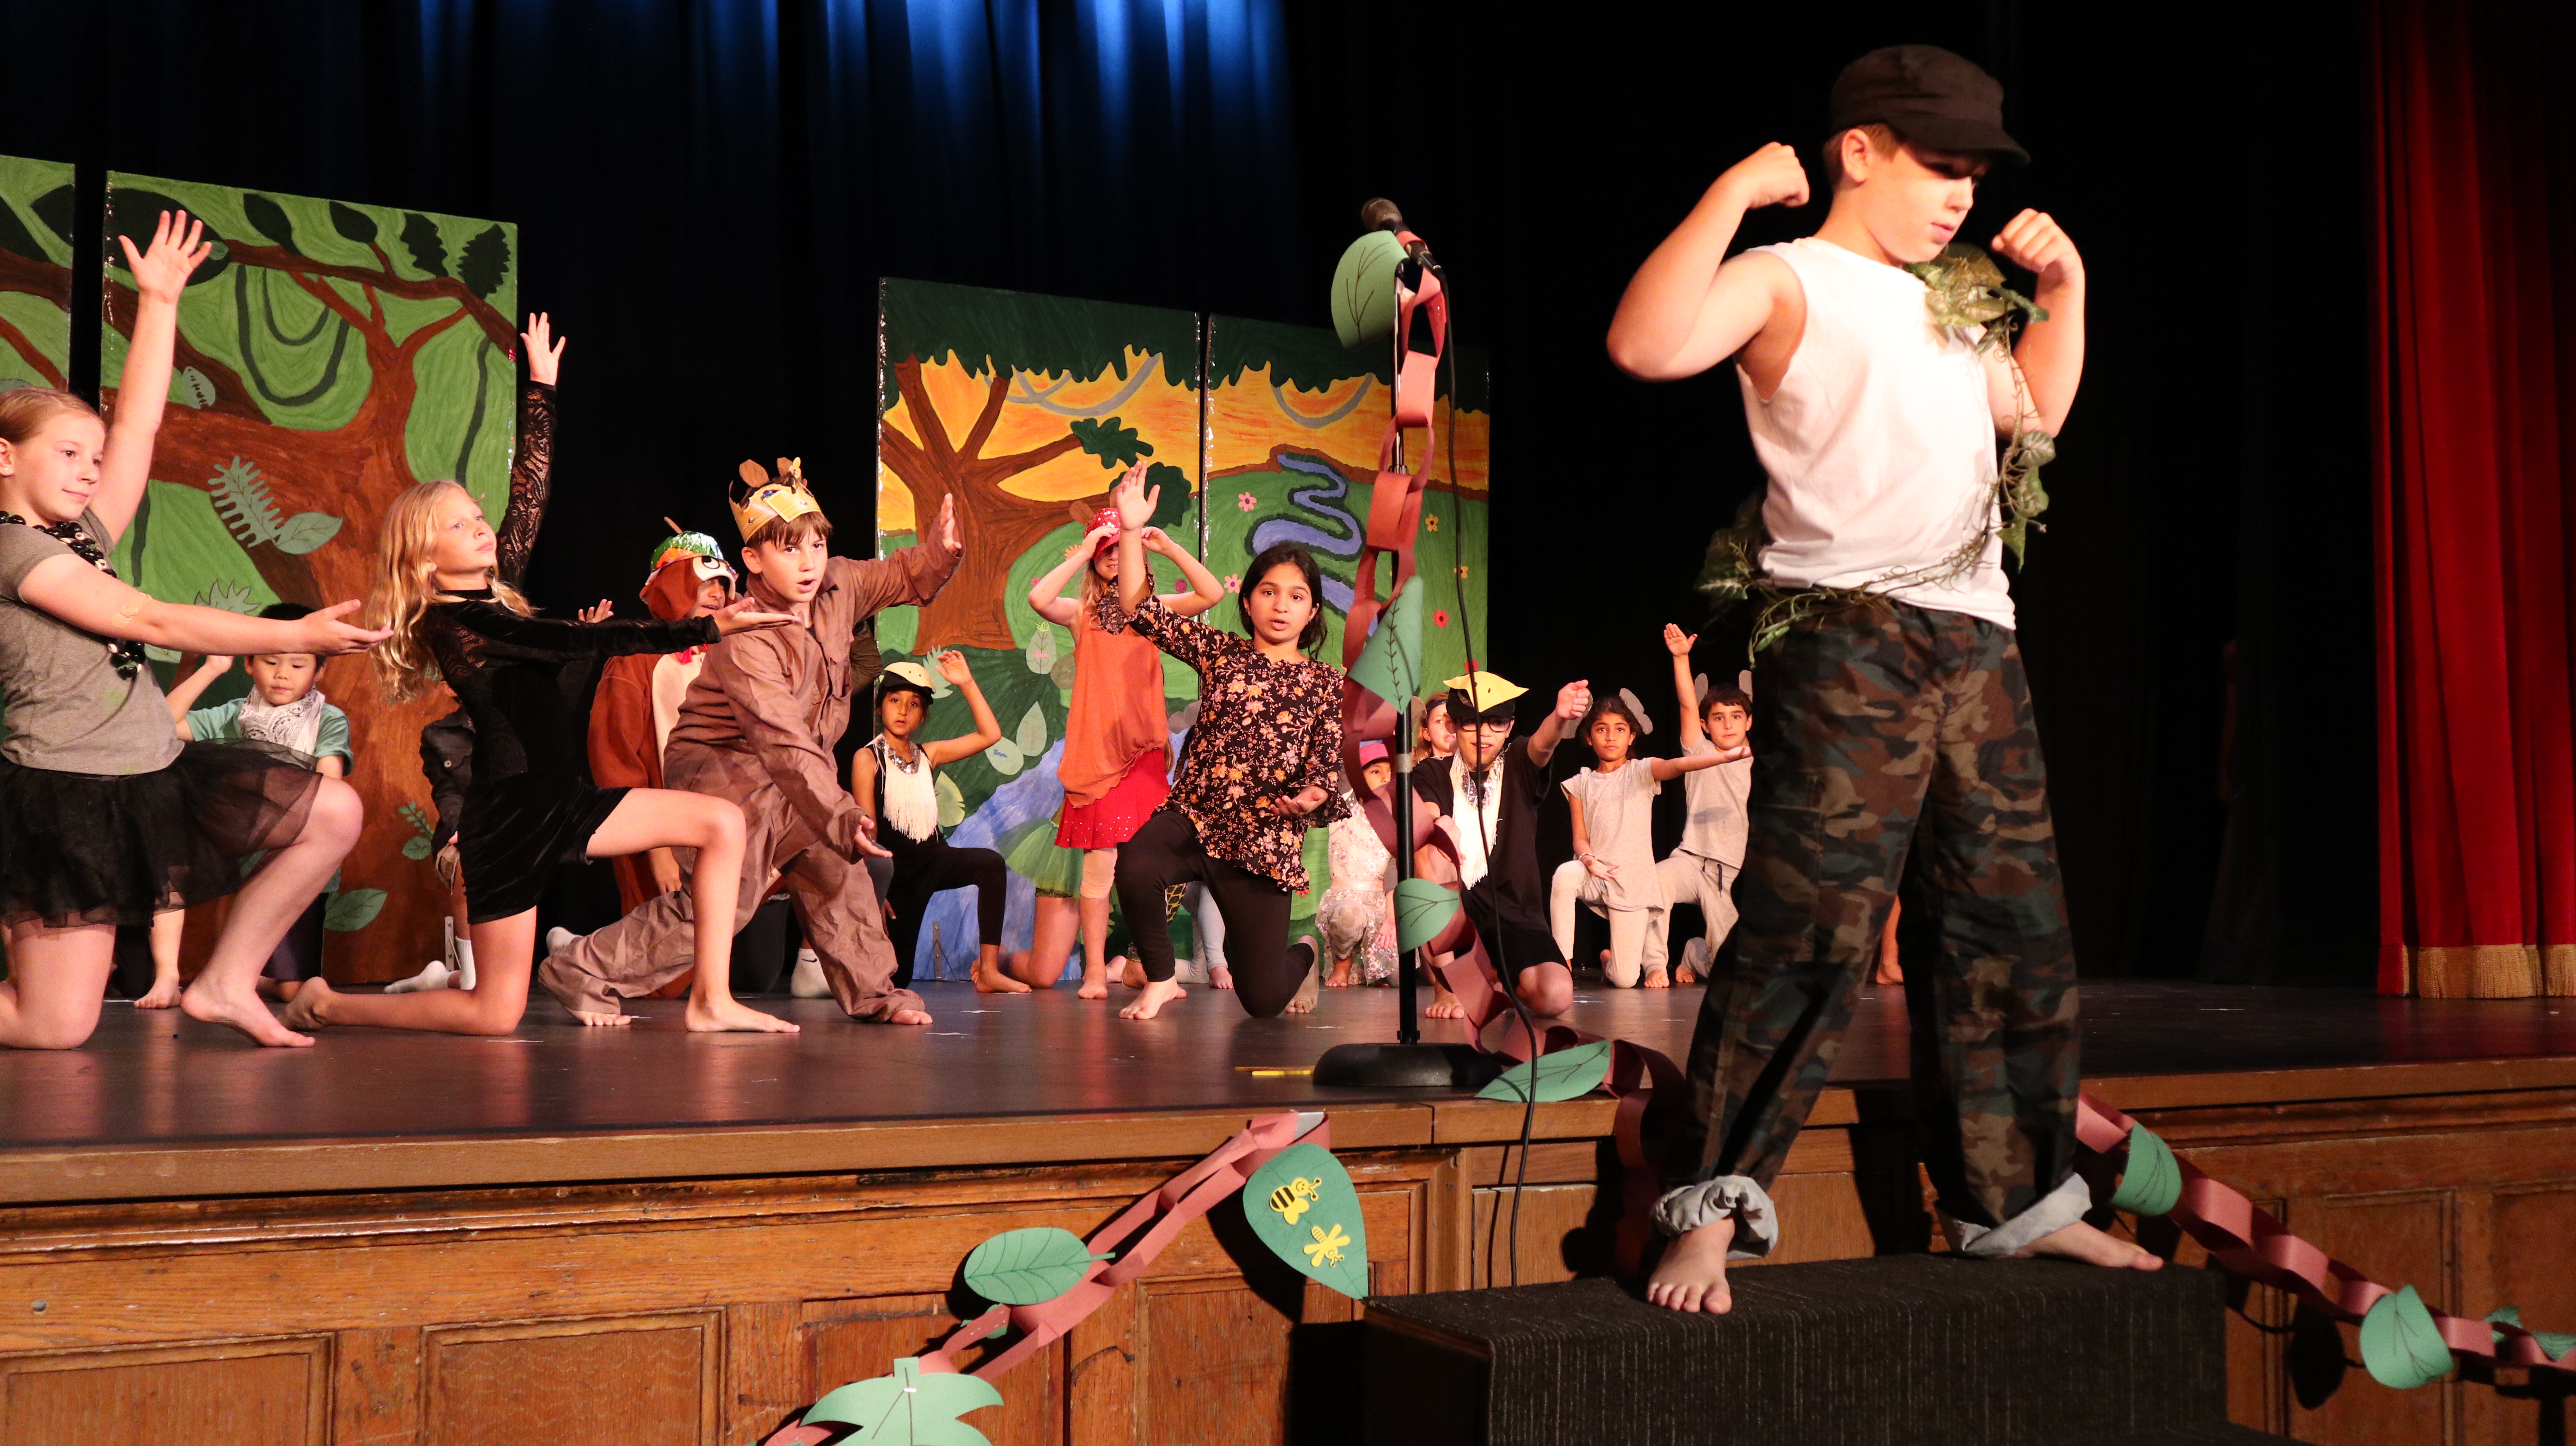 Camper's perform The Jungle Book in Summer 2019 Theater Camp